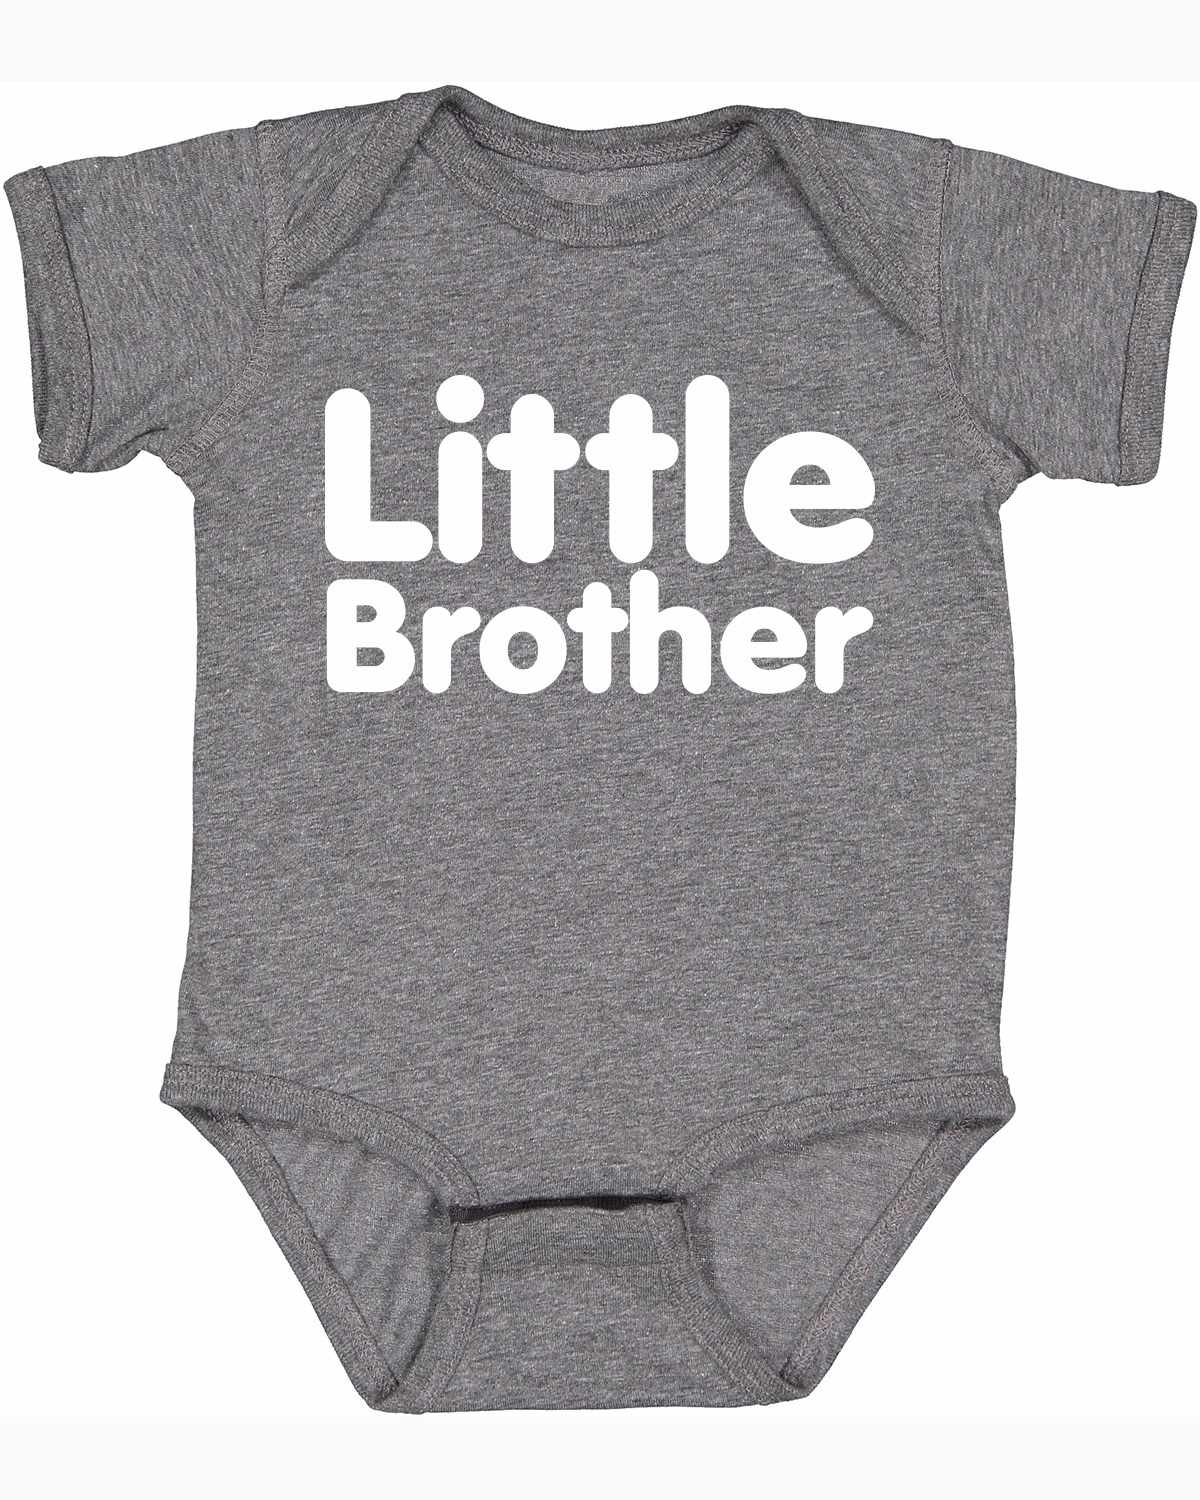 Little Brother Infant BodySuit (#1028-10)